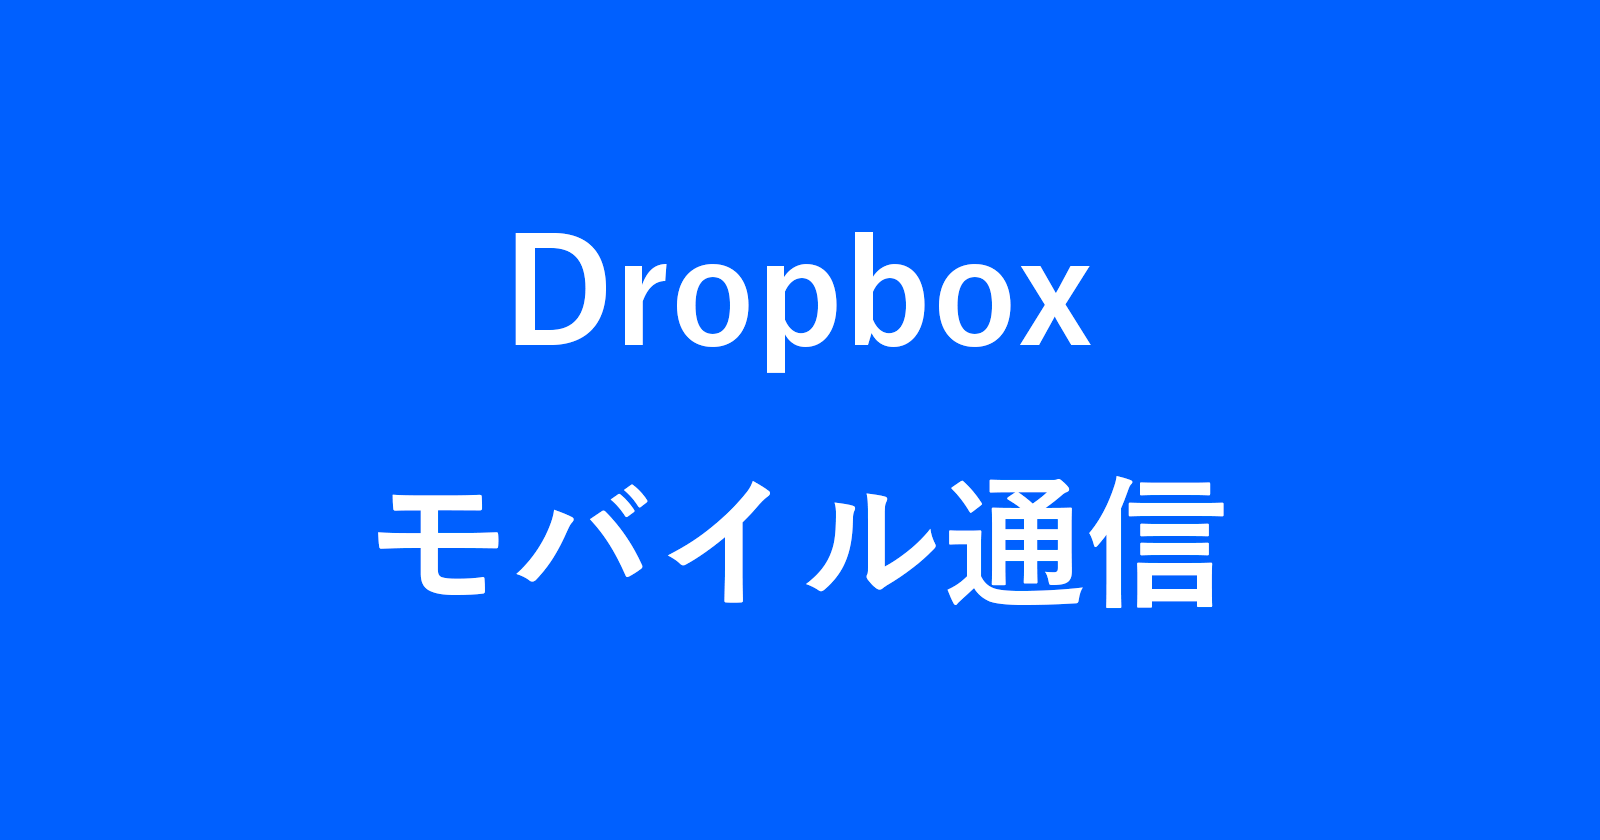 dropbox mobile